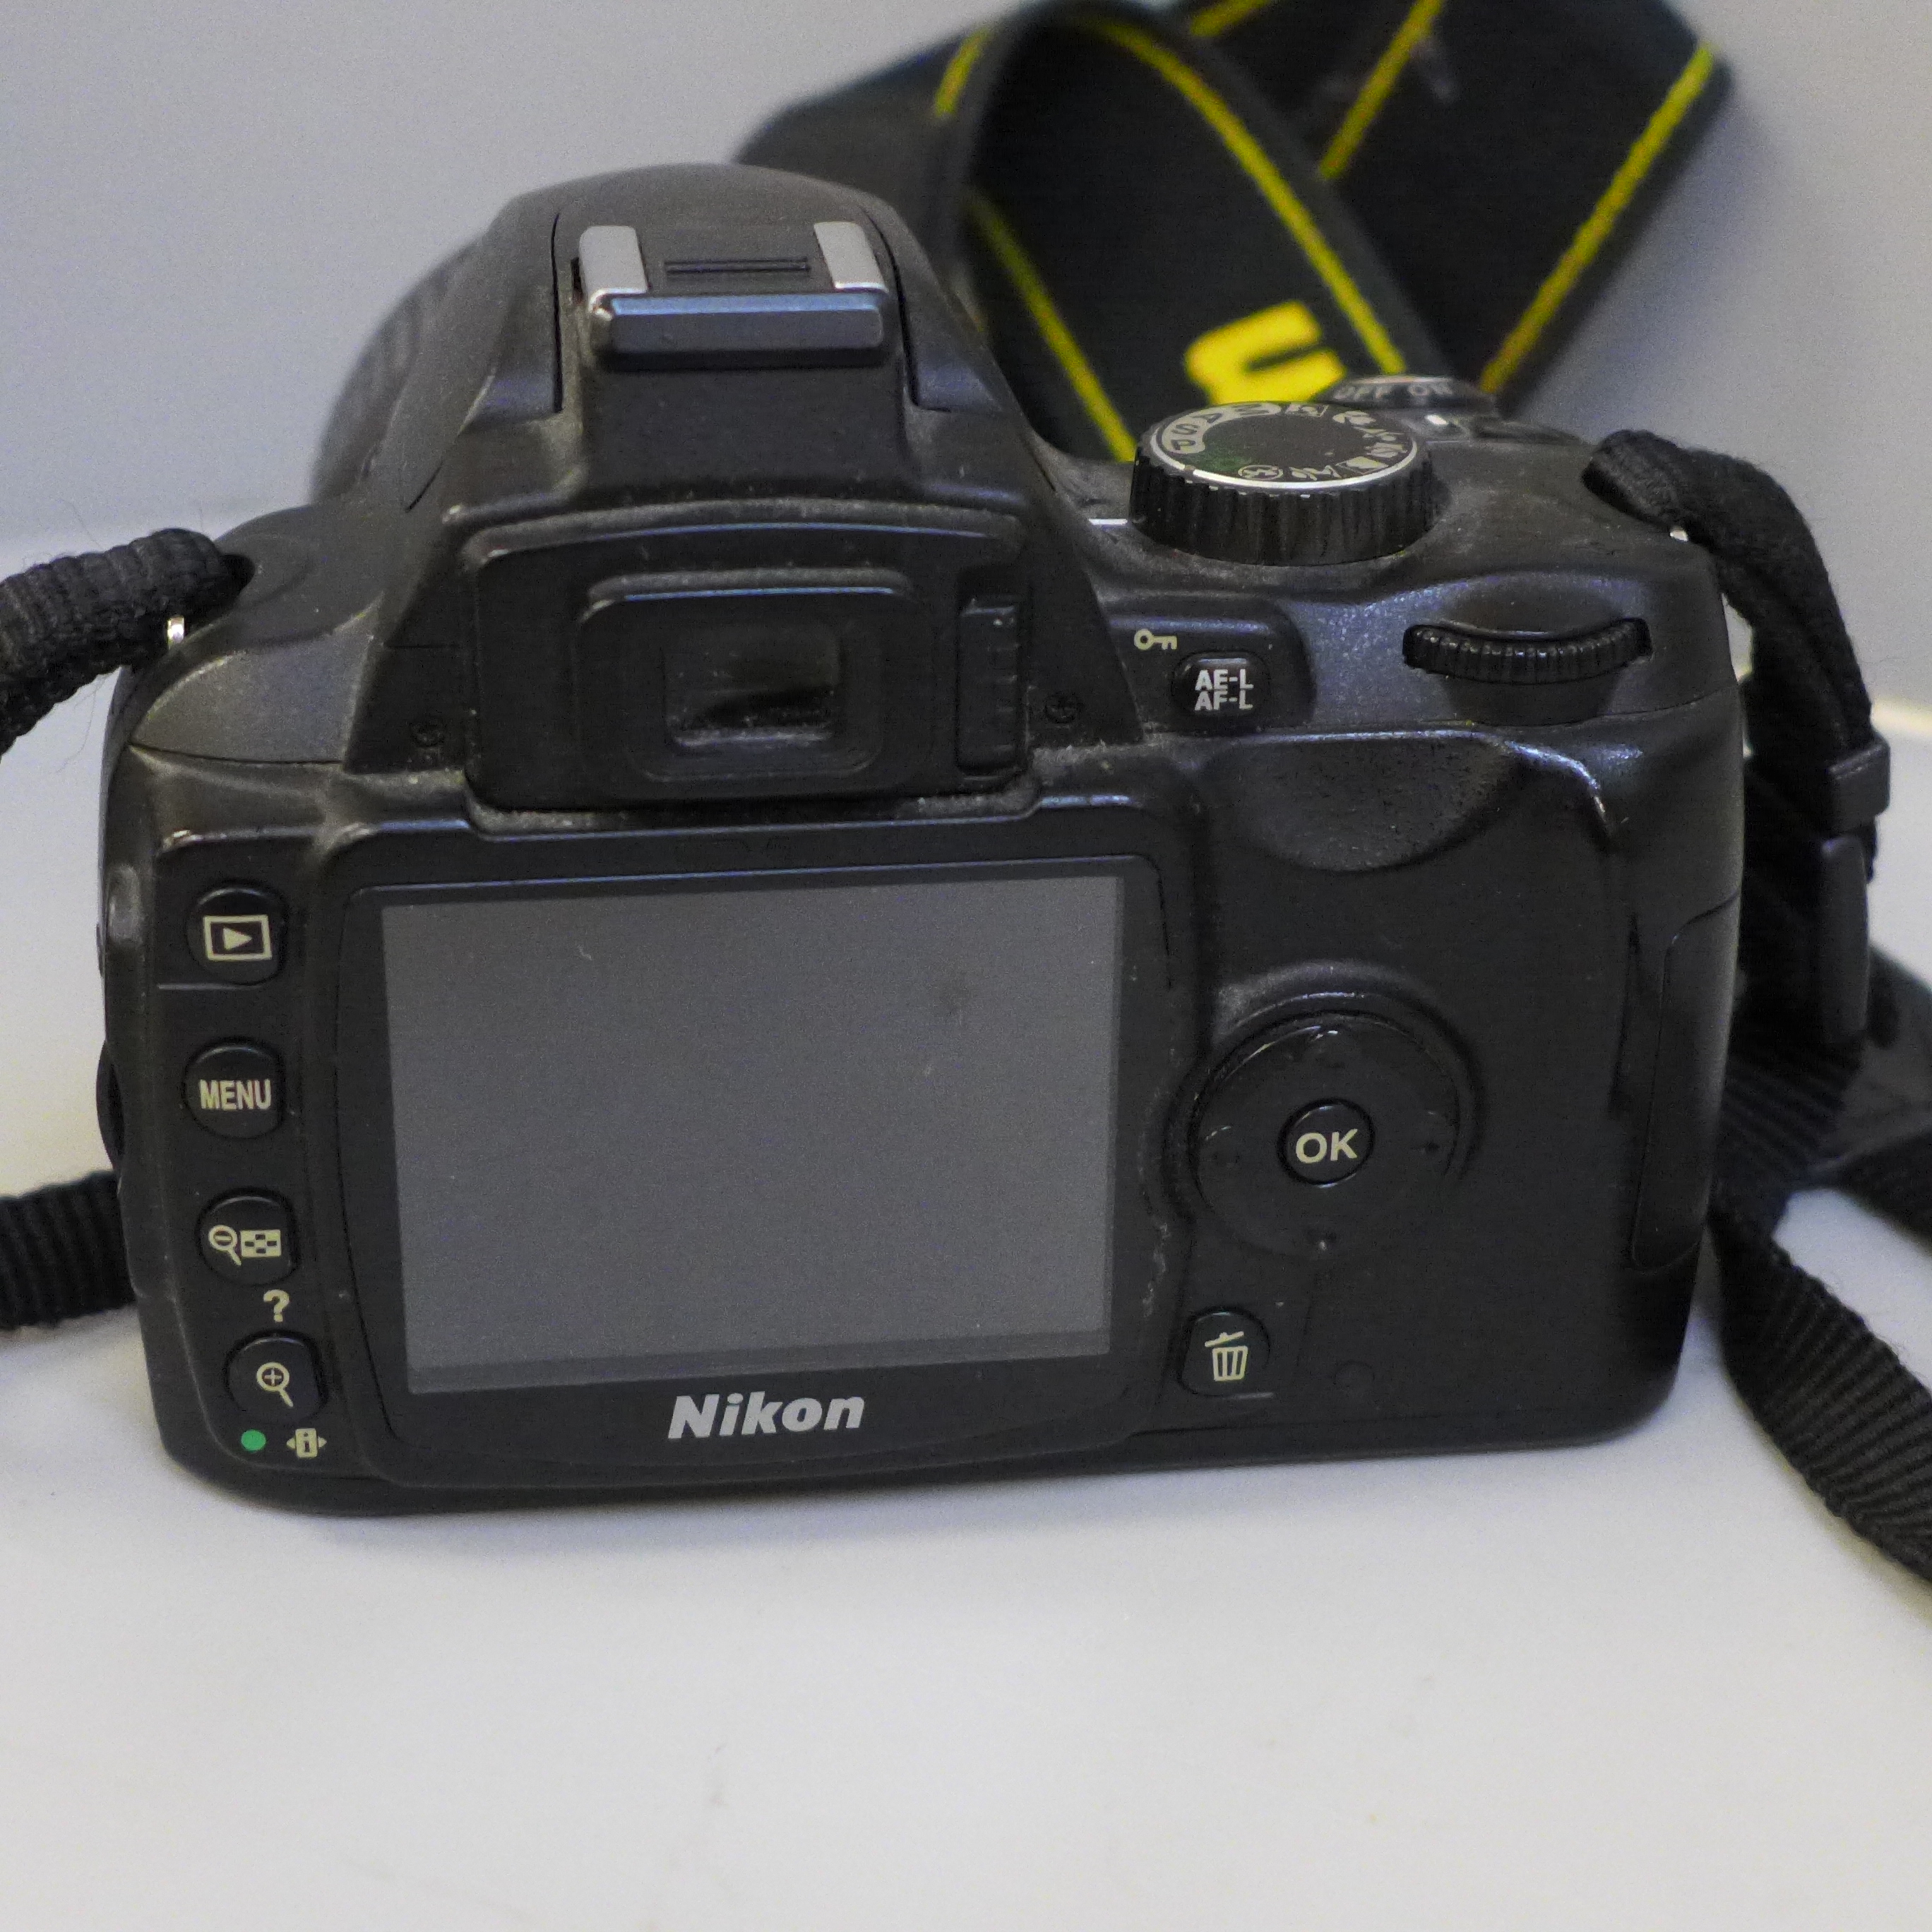 A Nikon D60 digital camera with a Nikon DX 18-55mm lens - Image 3 of 3